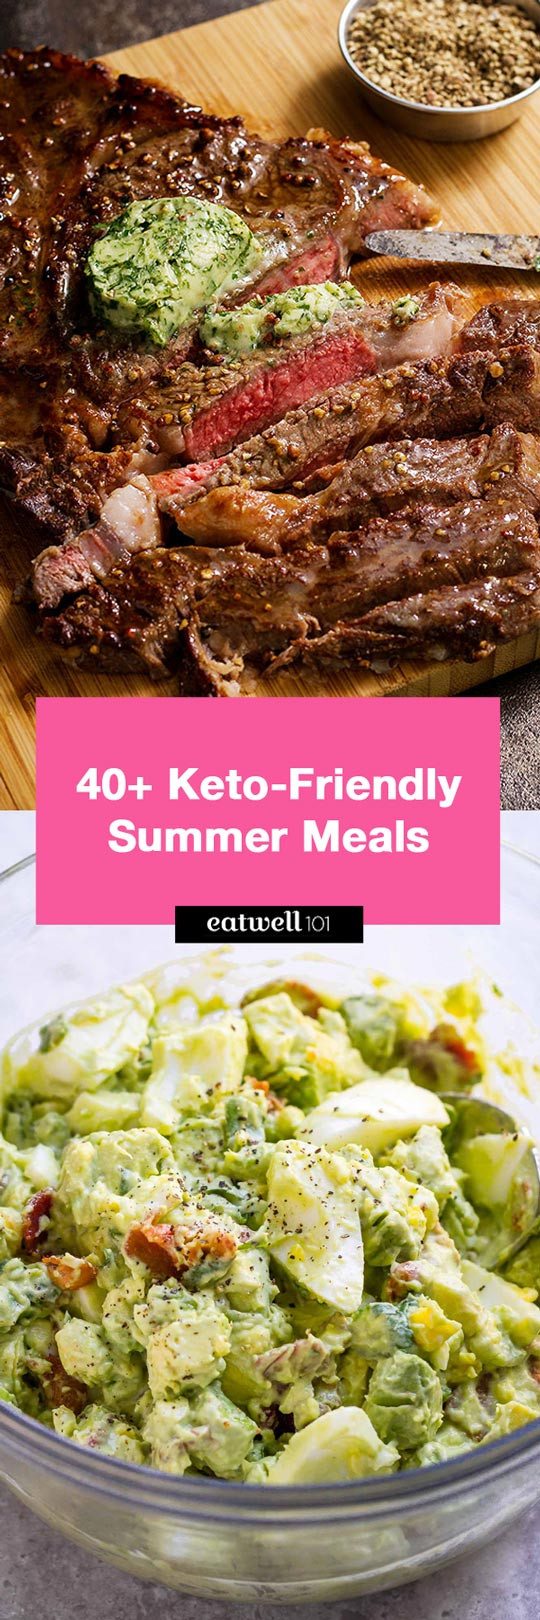 Summer Keto Meals
 43 Easy Keto Friendly Summer Meals — Eatwell101